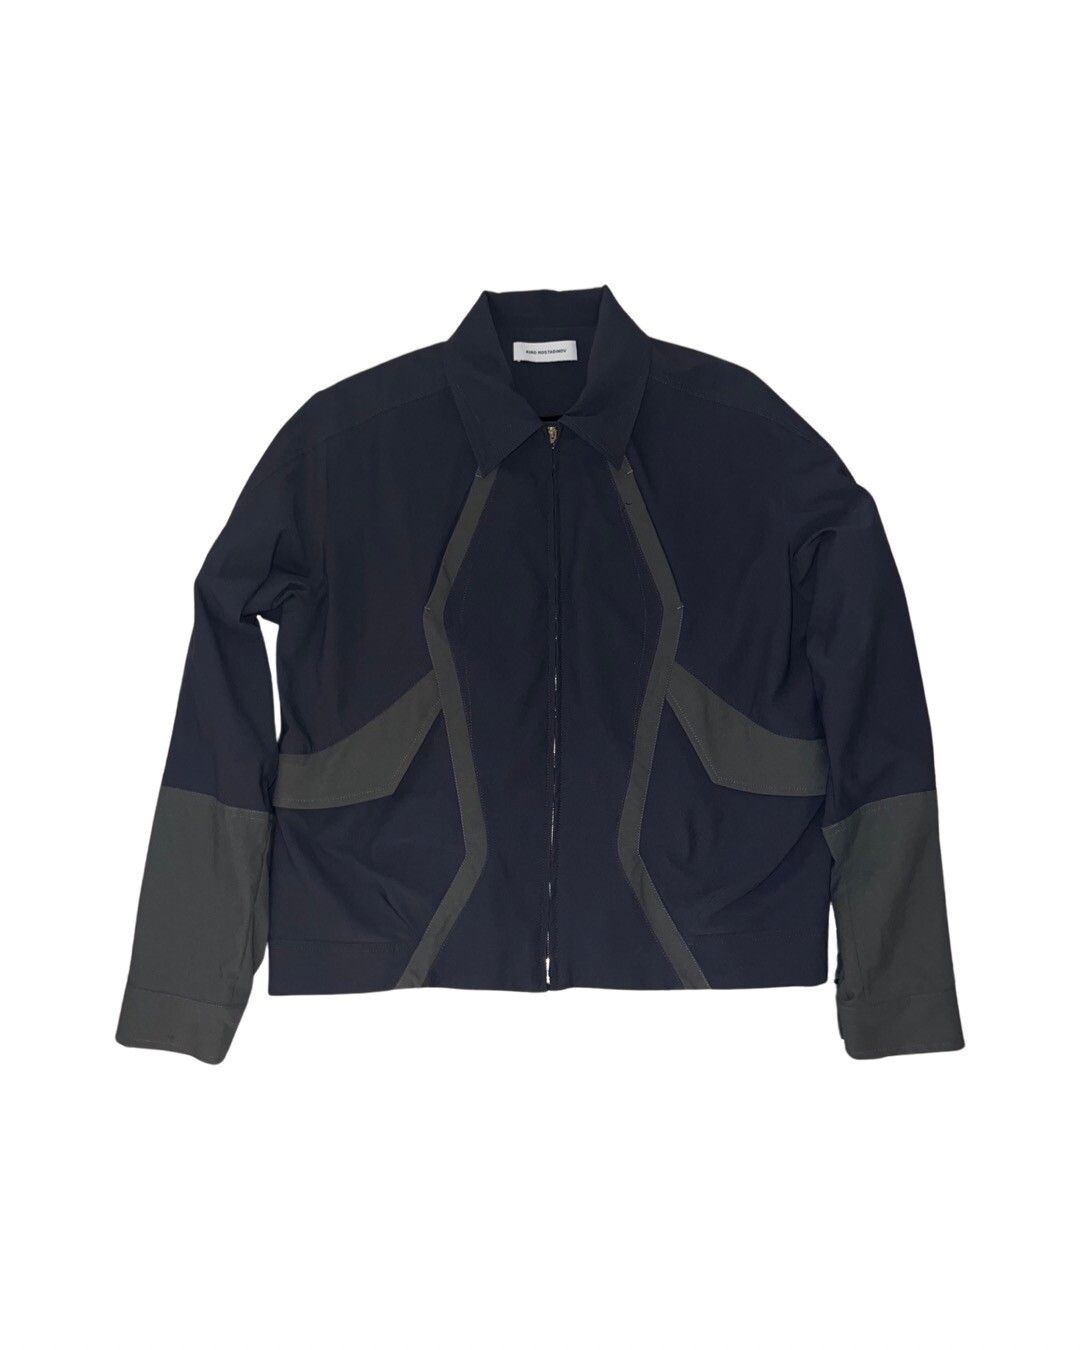 Kobe uniform jacket - 2